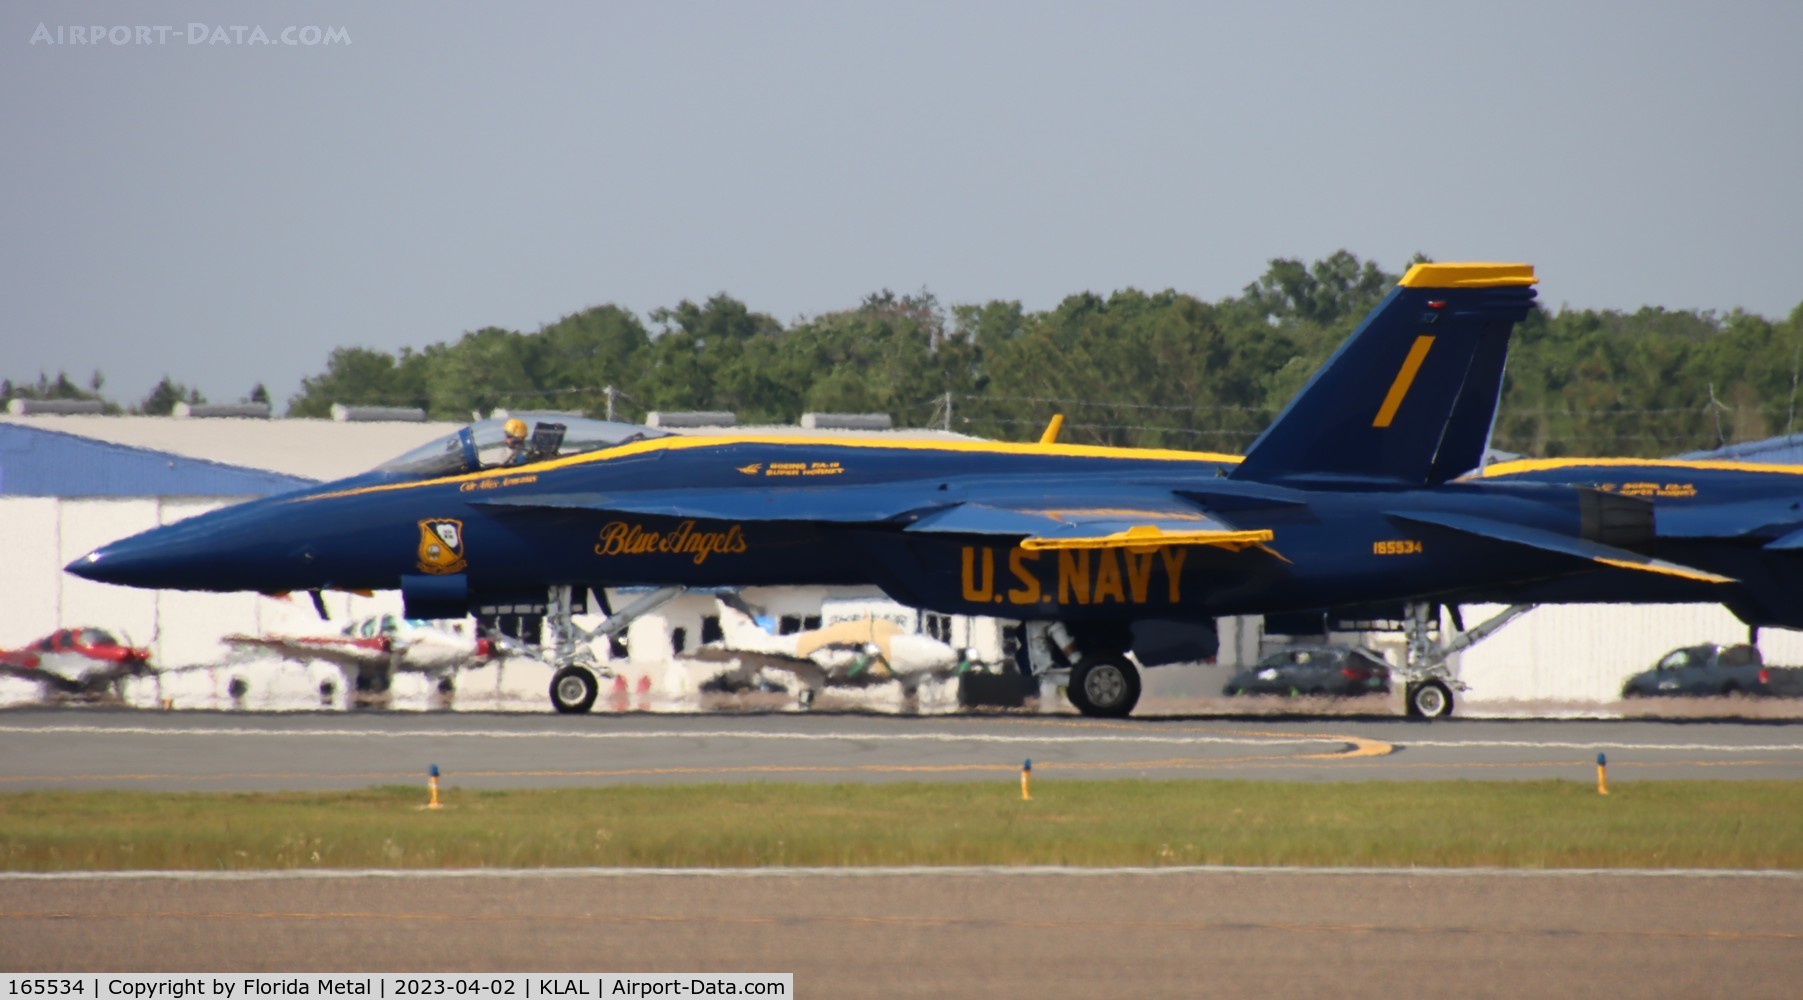 165534, Boeing F/A-18E Super Hornet C/N 1460/E007, Blue Angels F-18E zx